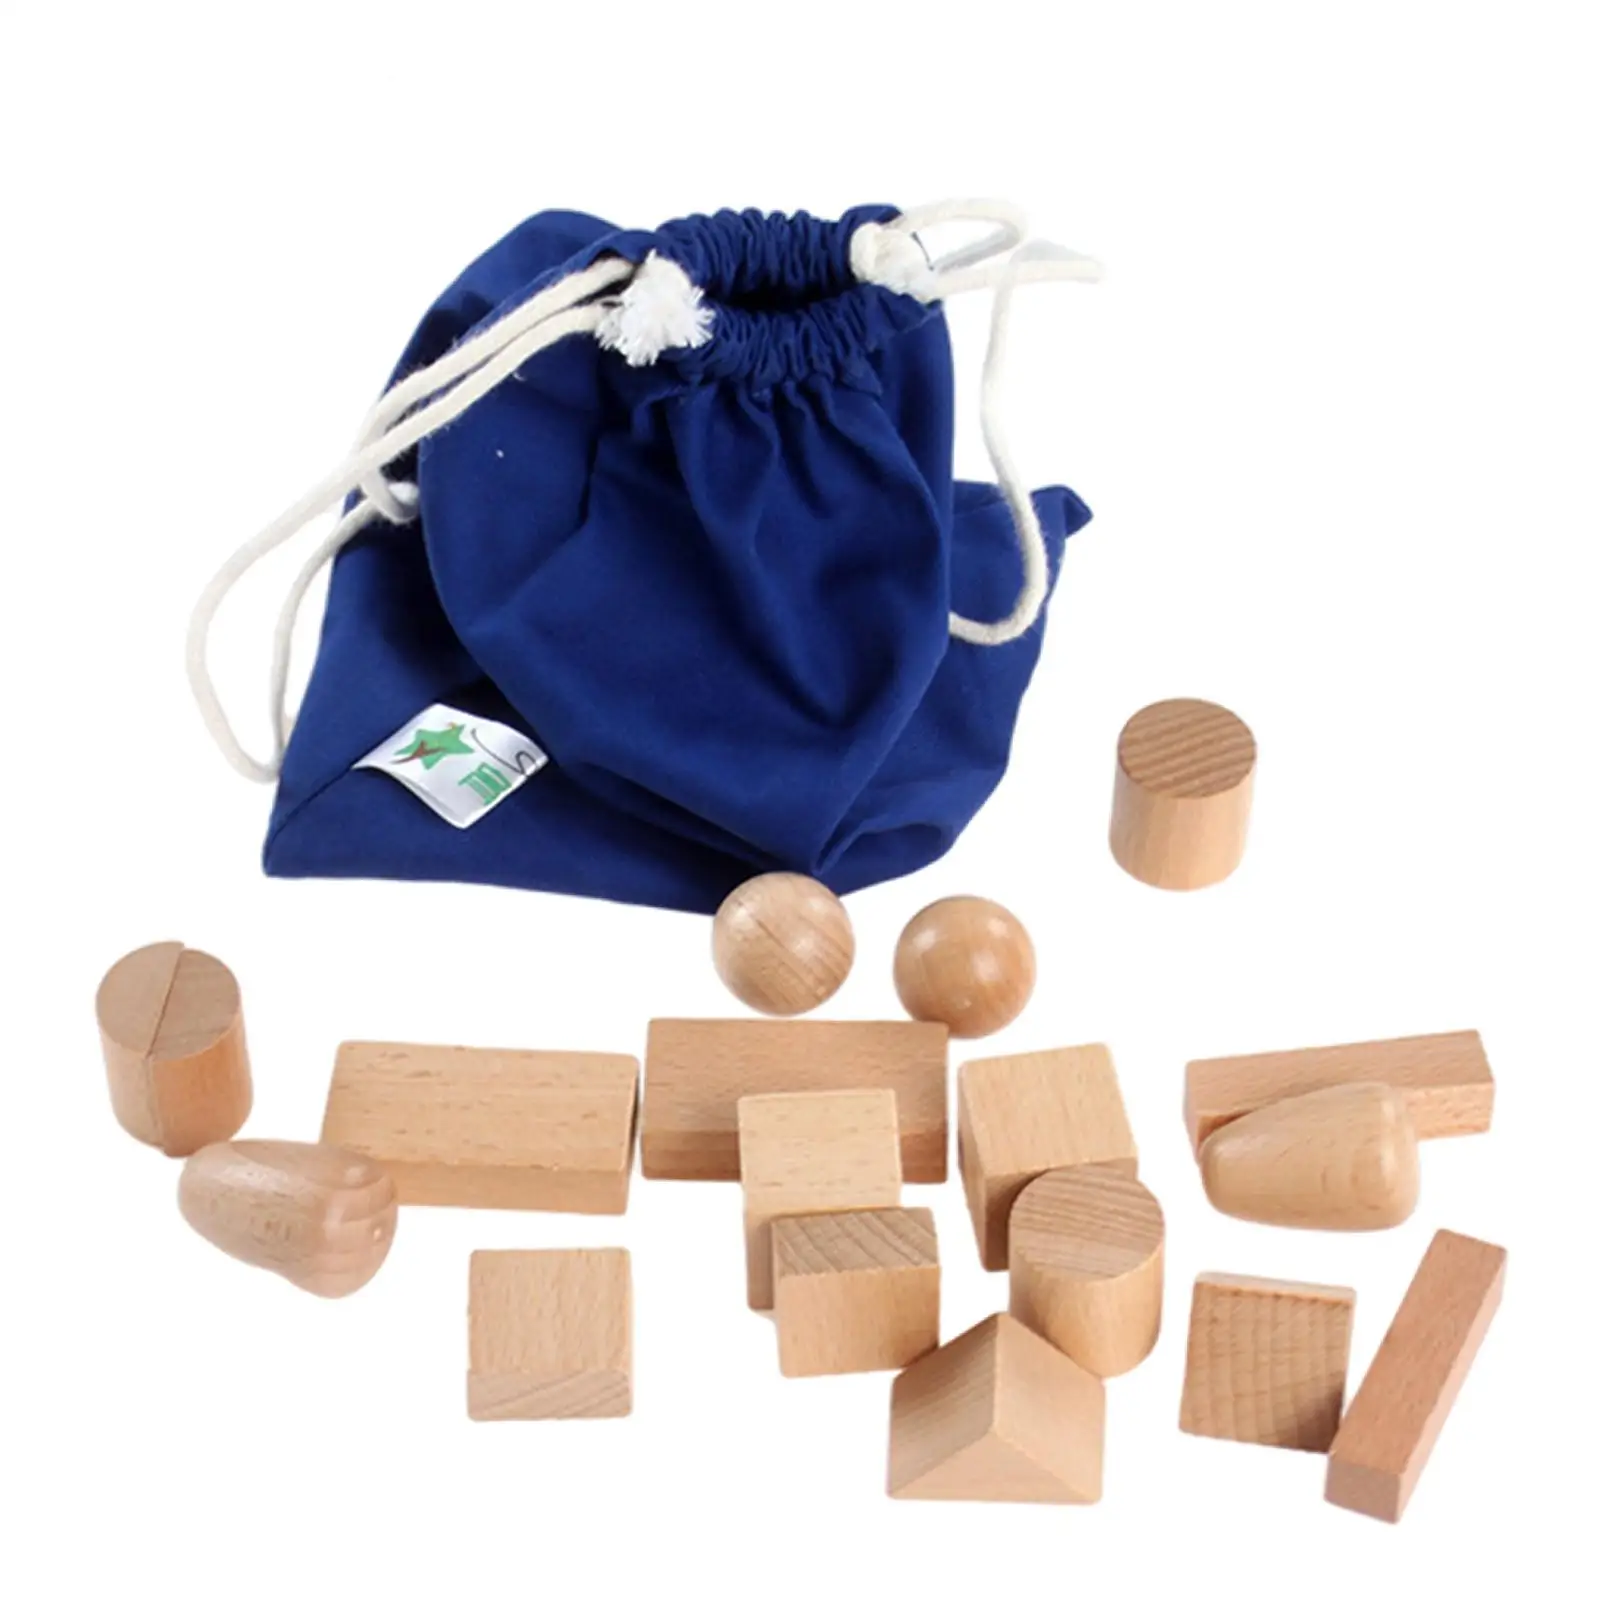 18x Wooden Geometry Blocks Building Blocks Set Educational Toys DIY for Kids